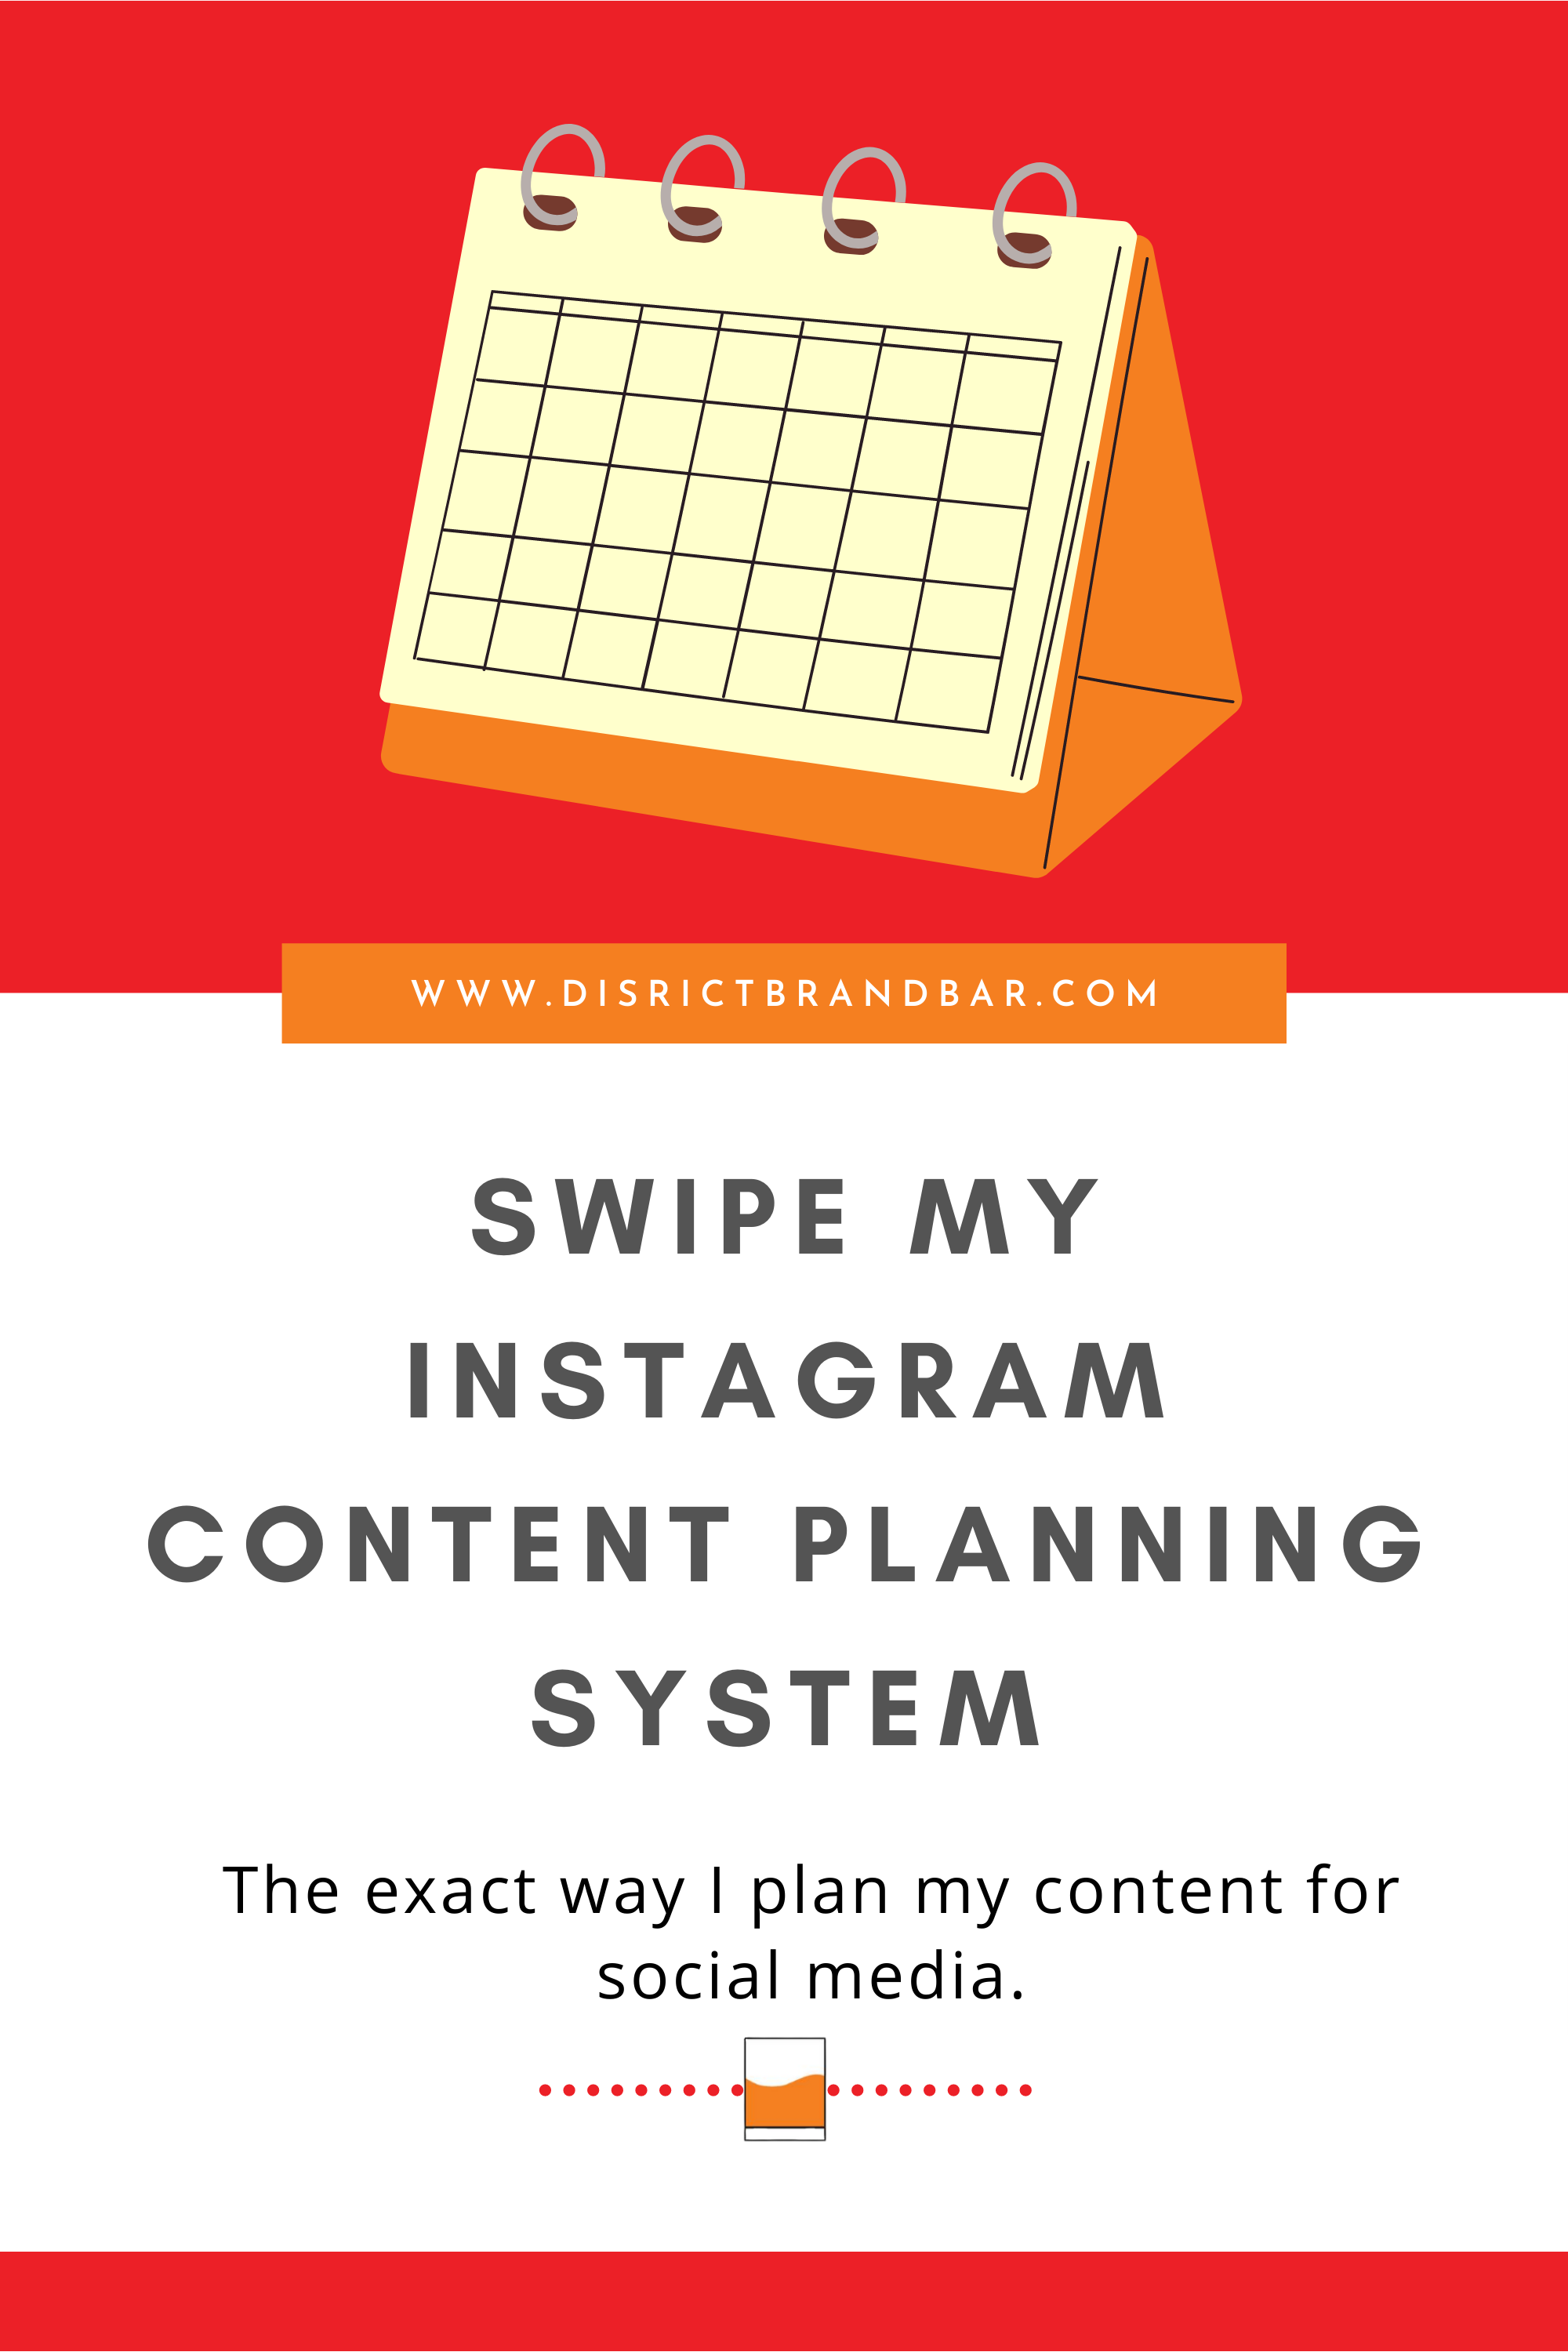 Swipe My Content Planning System